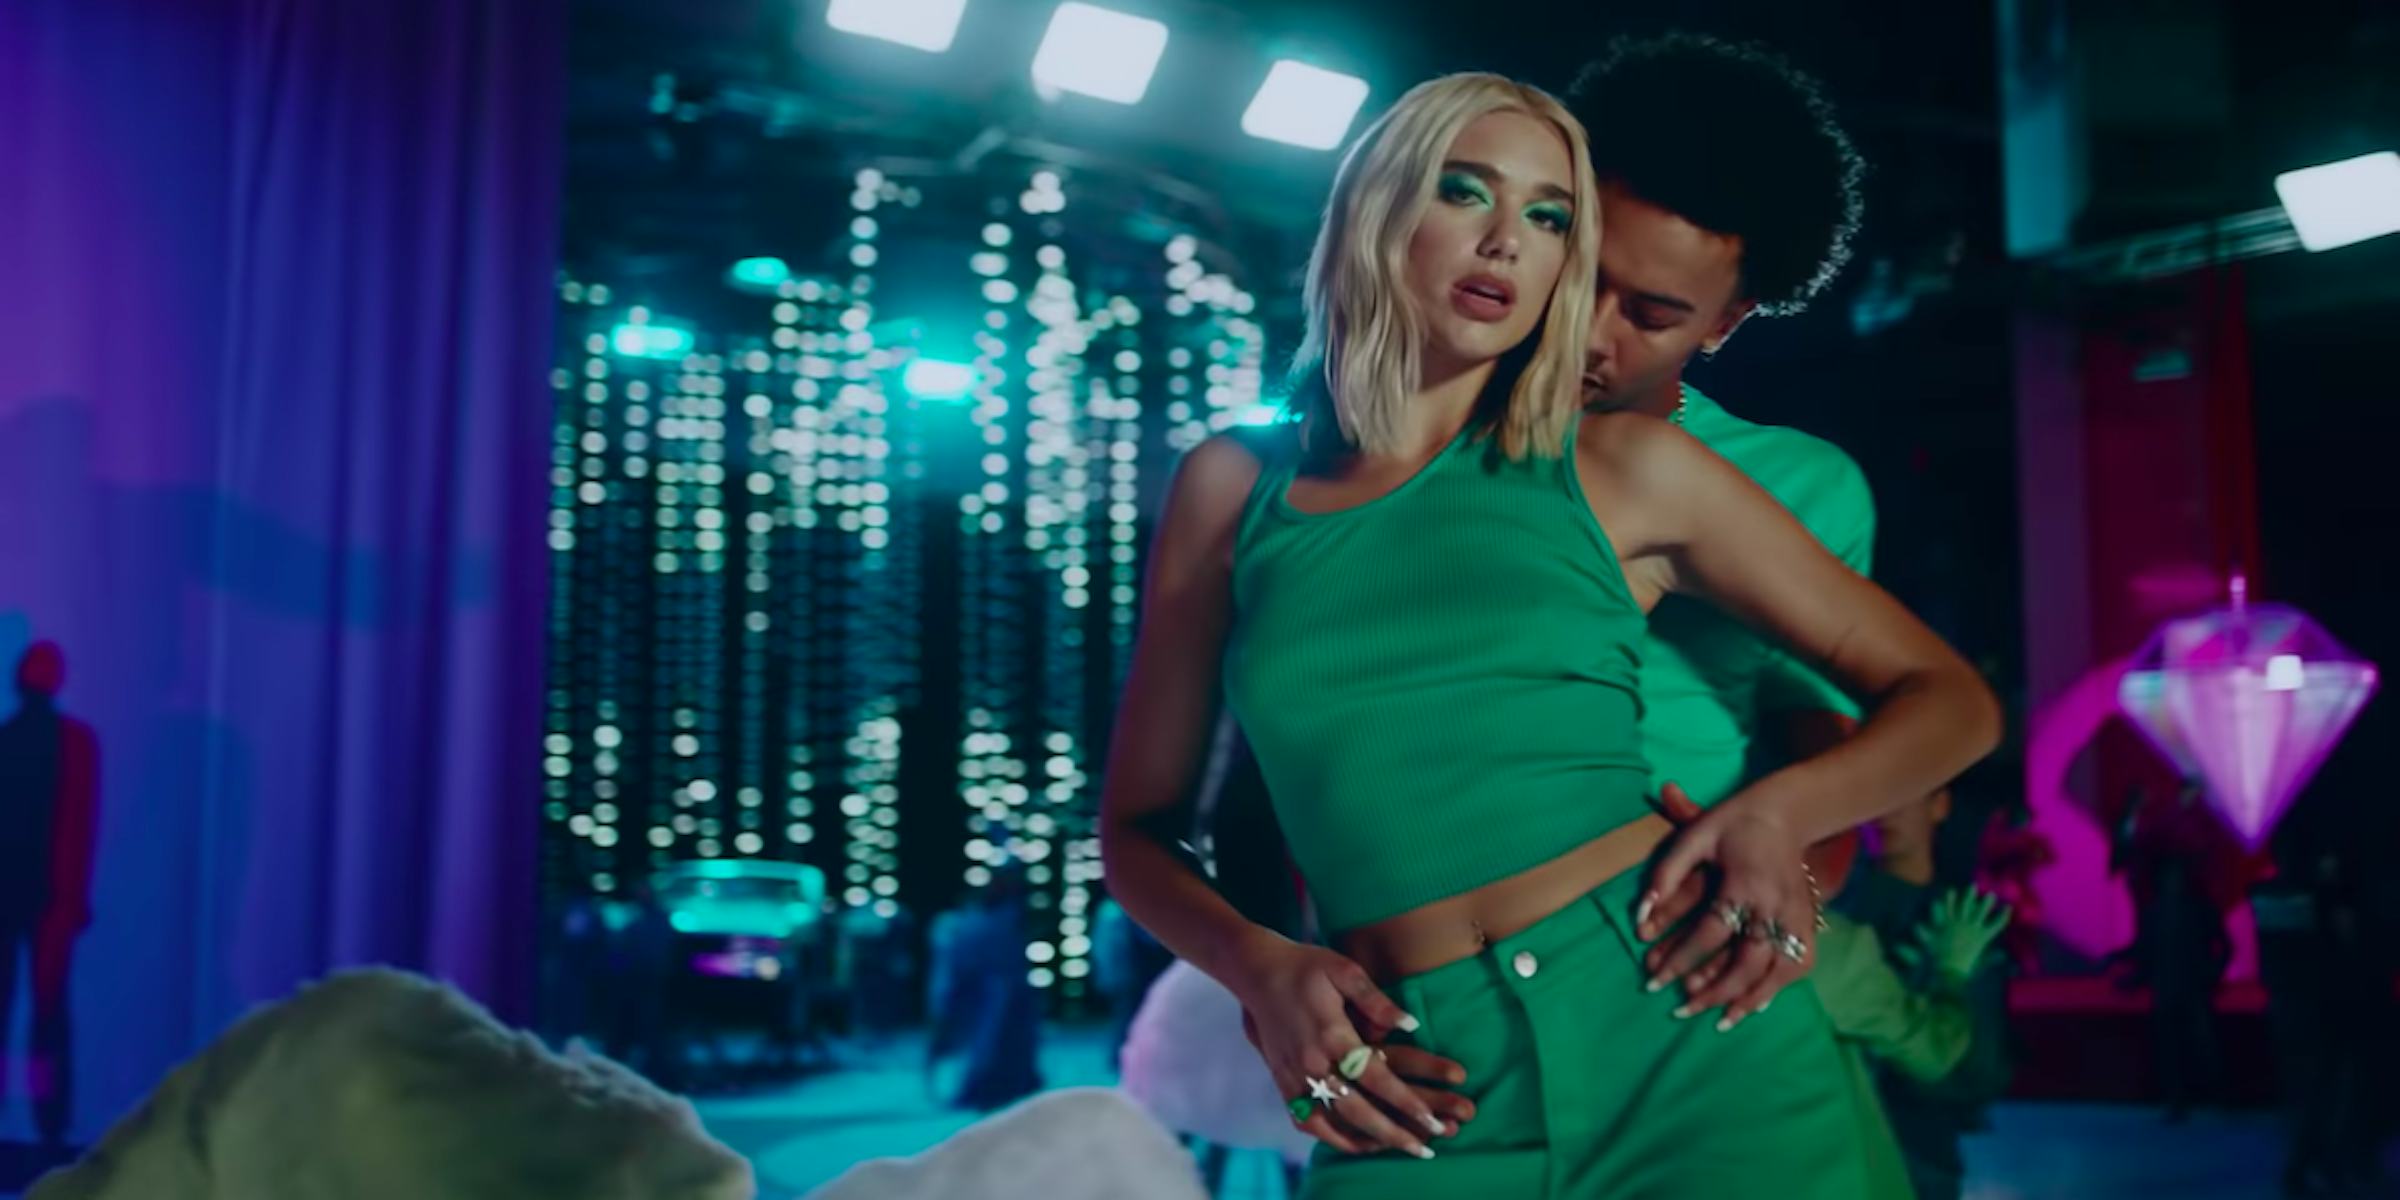 Dua Lipas “physical” Music Video Combines Disco And Tango 7611